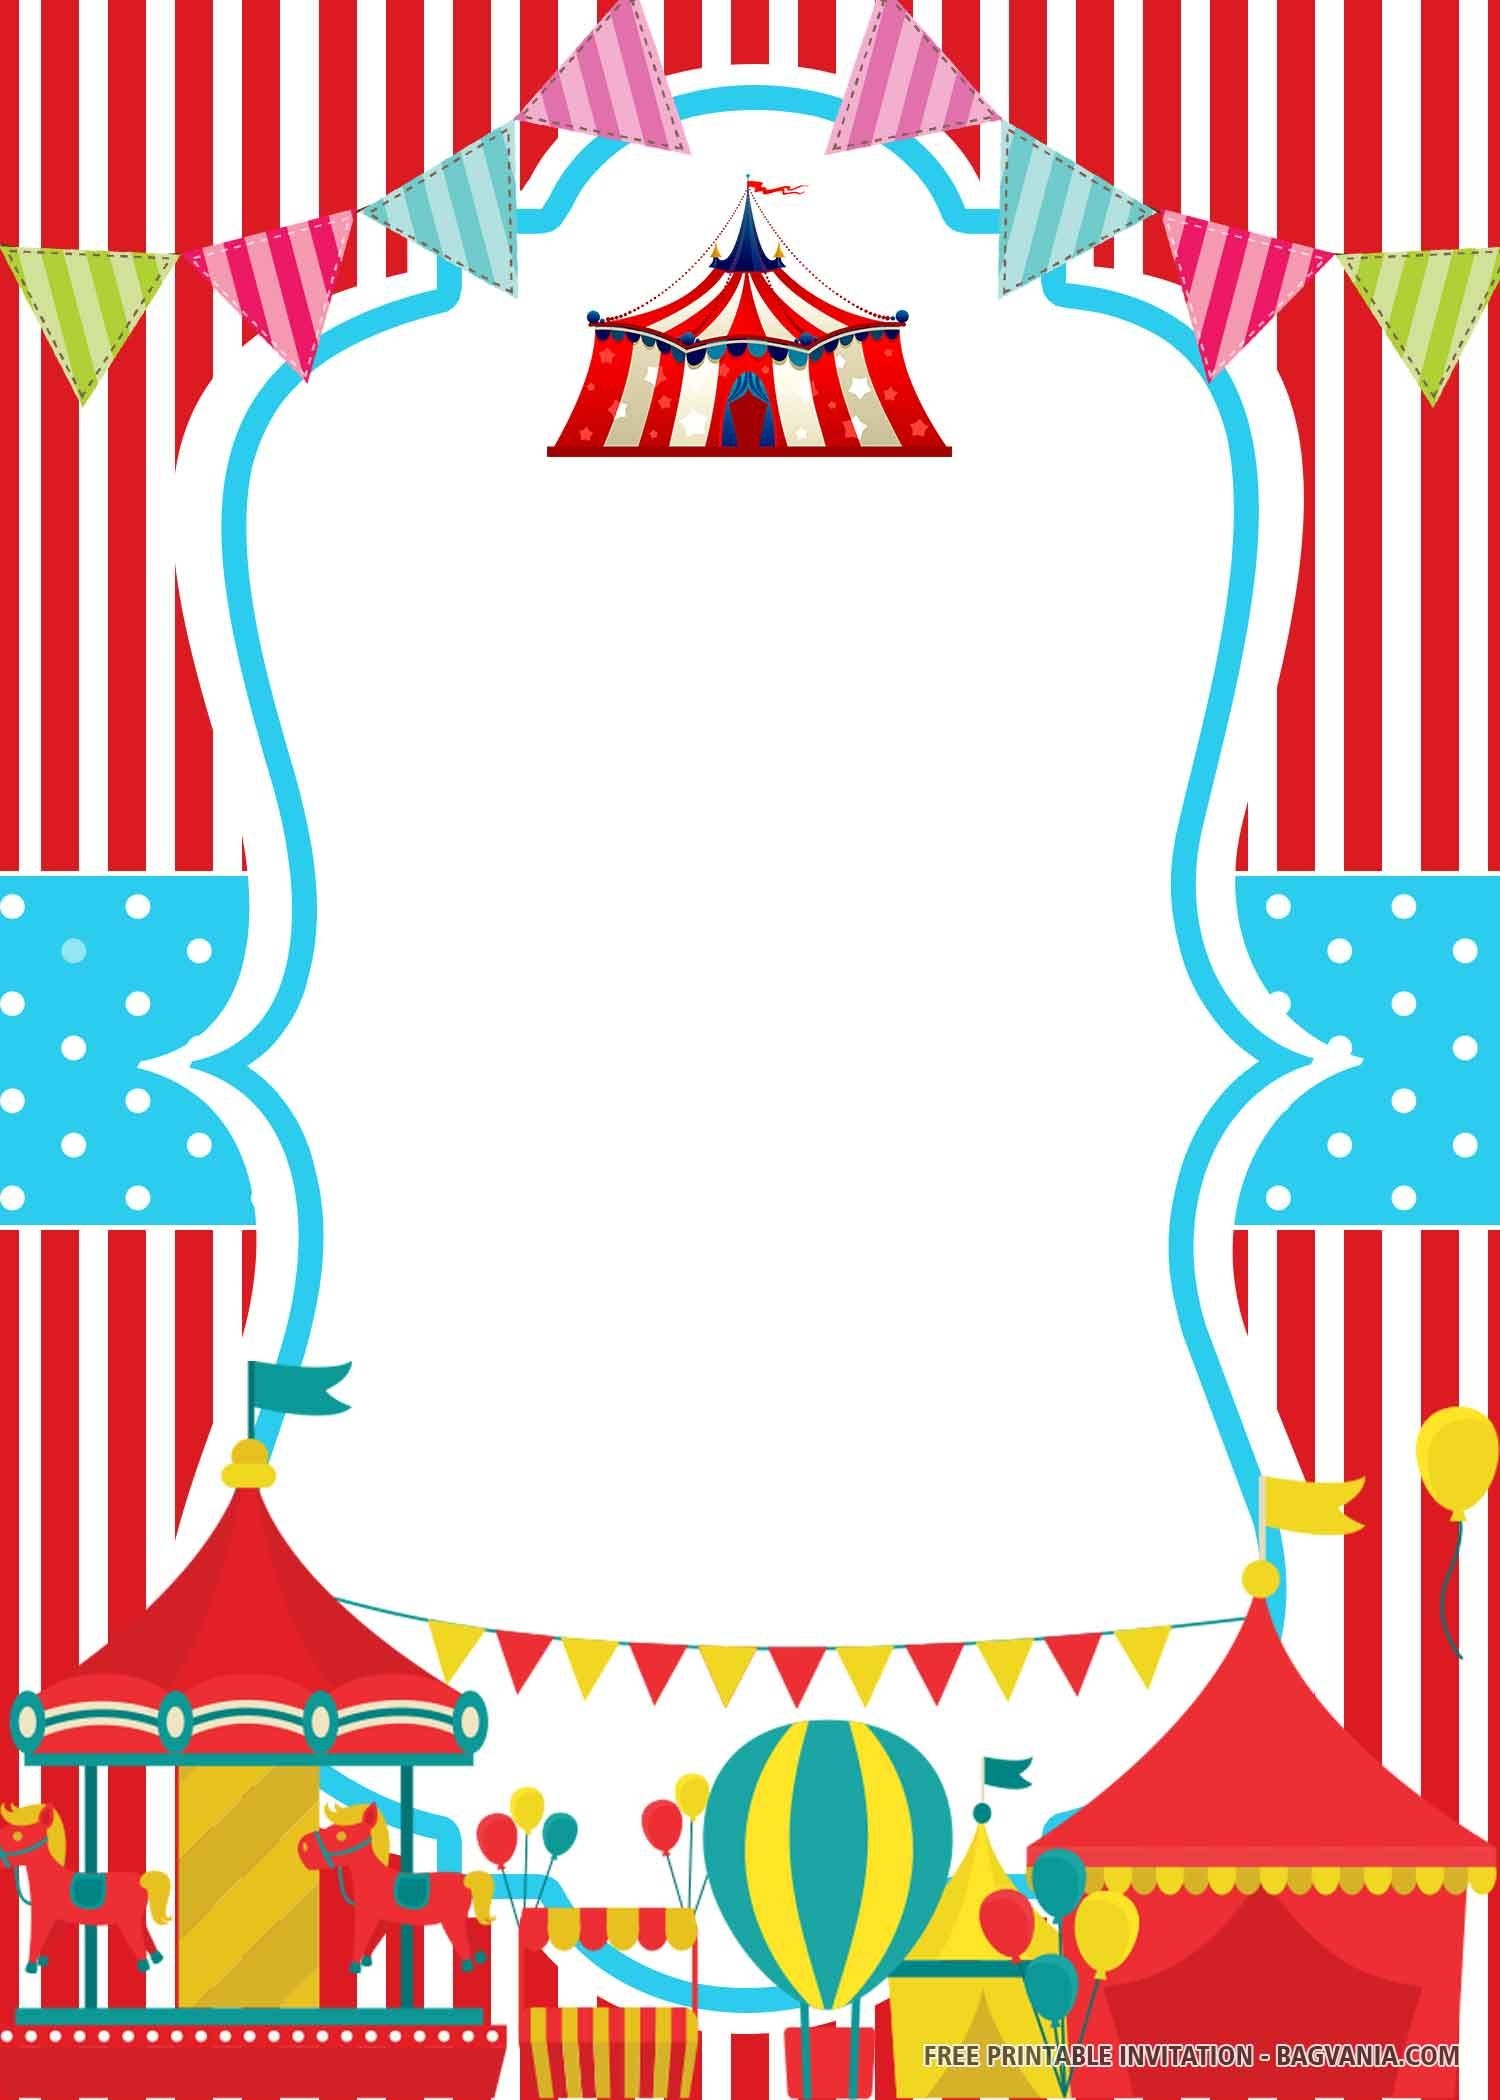  FREE PRINTABLE Stripes Circus Birthday Invitation Templates 